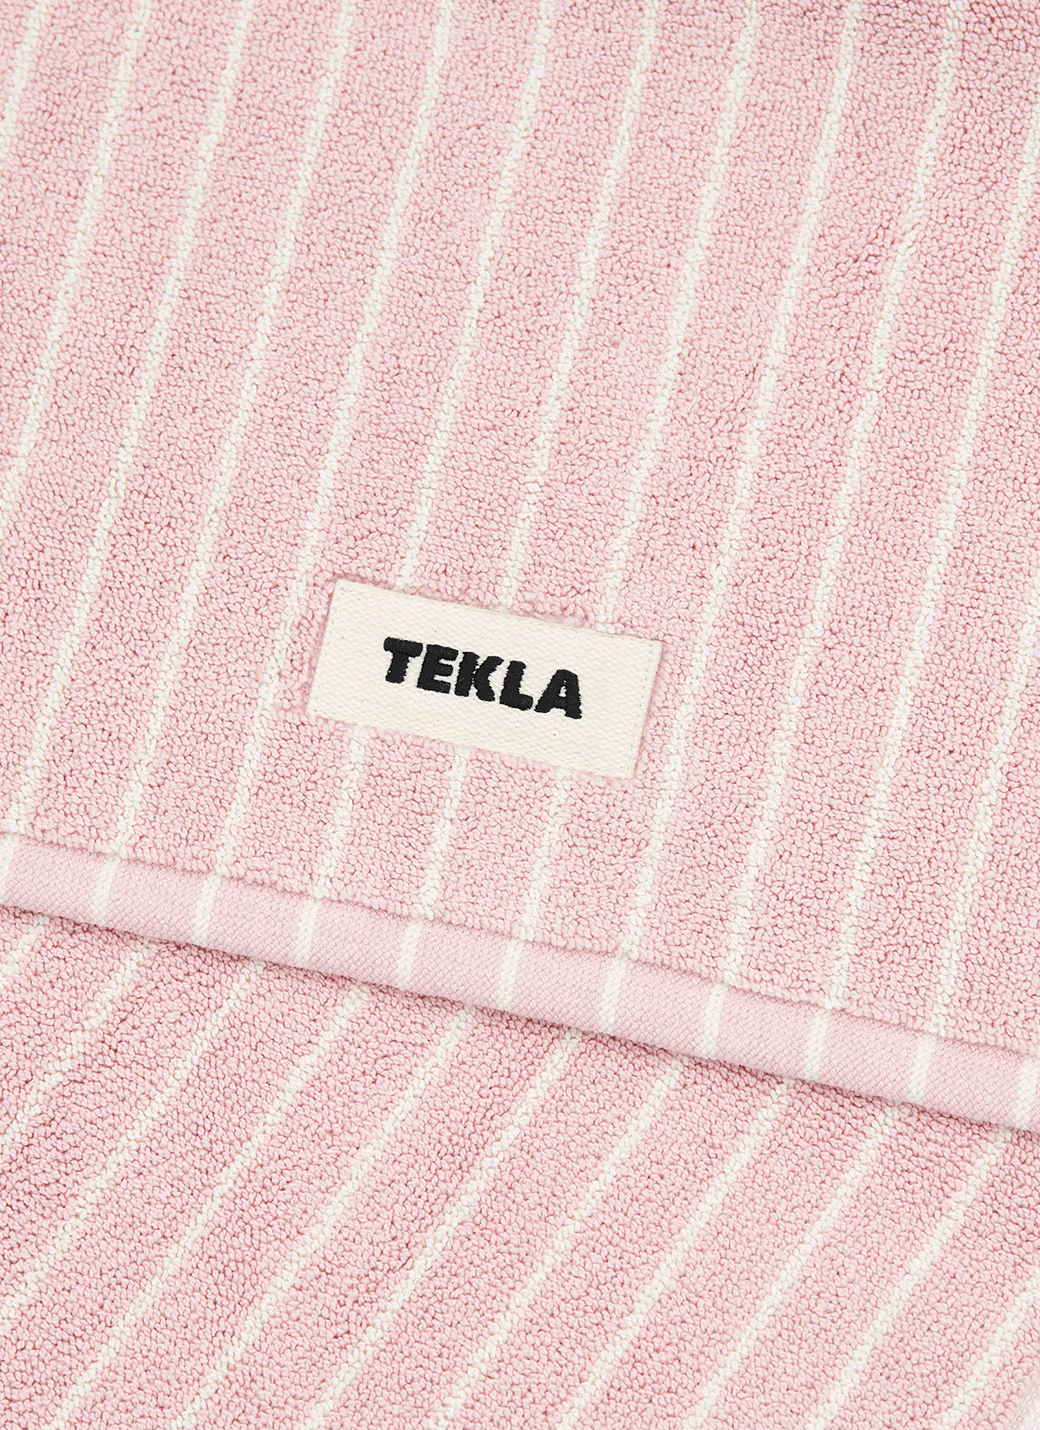 Bathmat - Shaded Pink Stripes